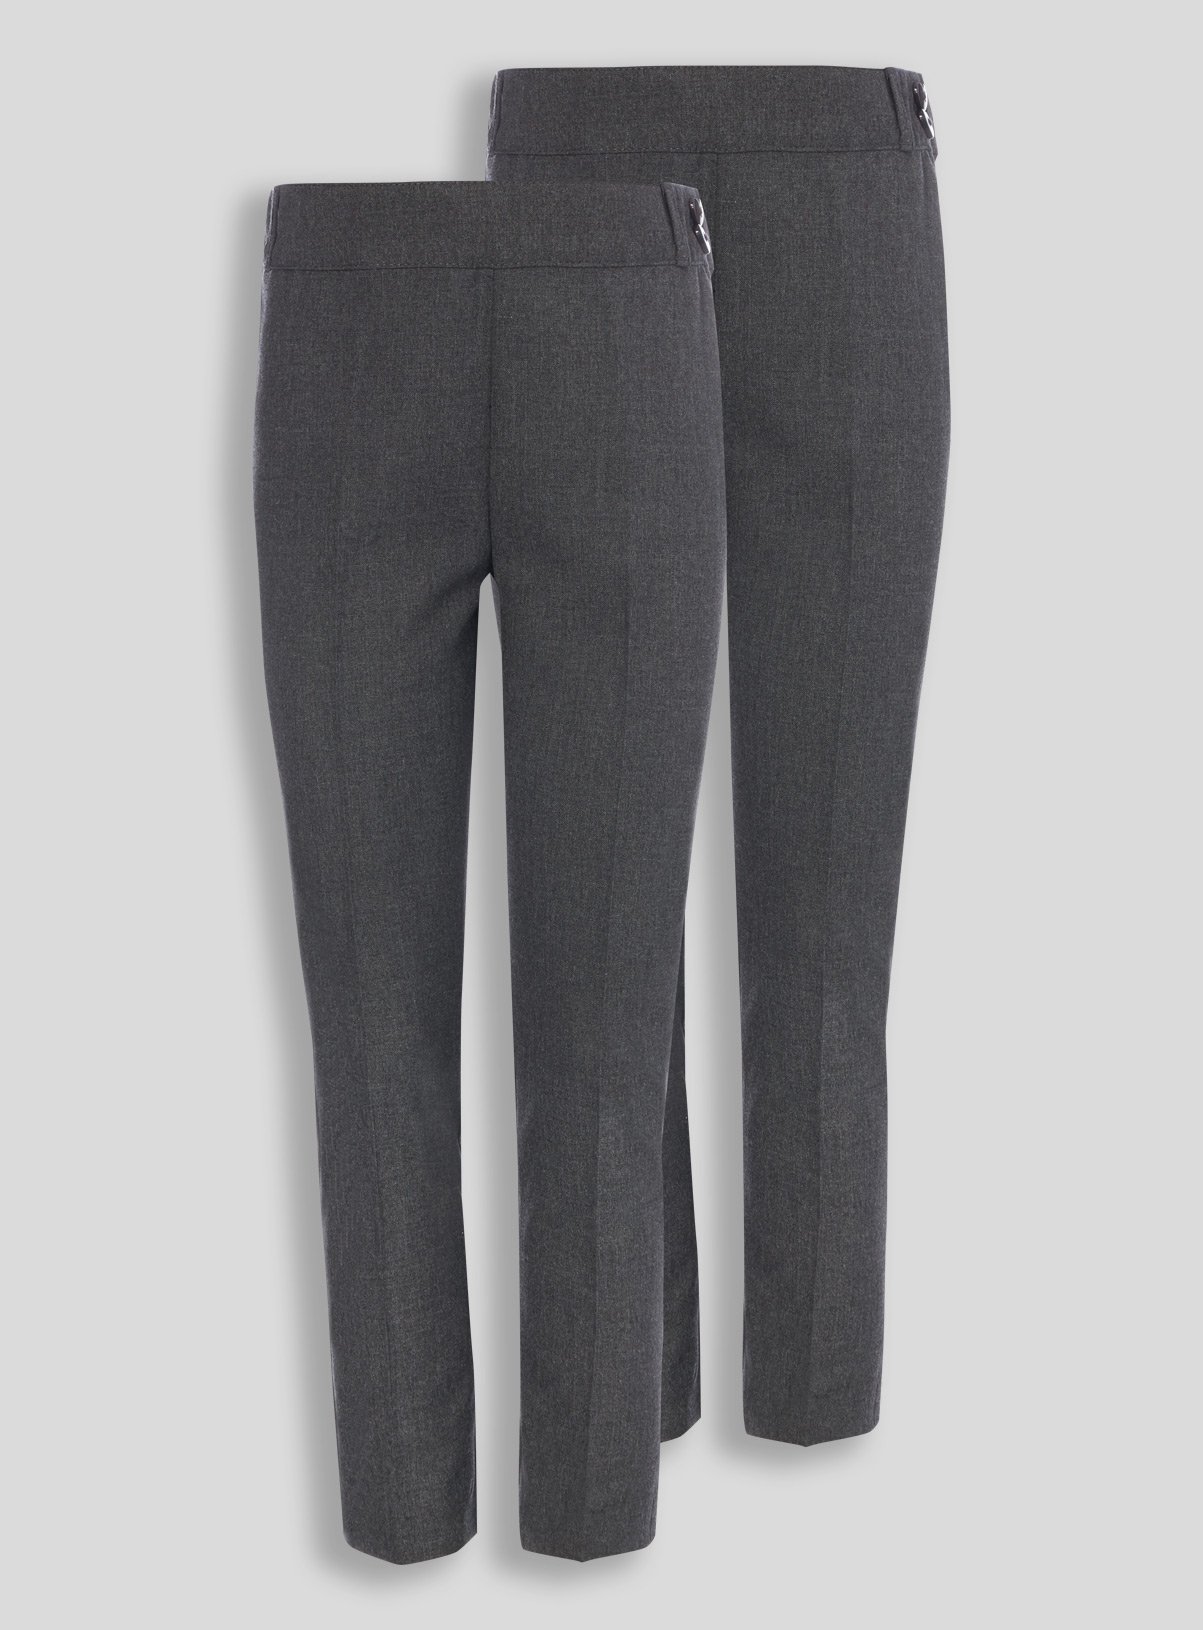 tight grey school trousers